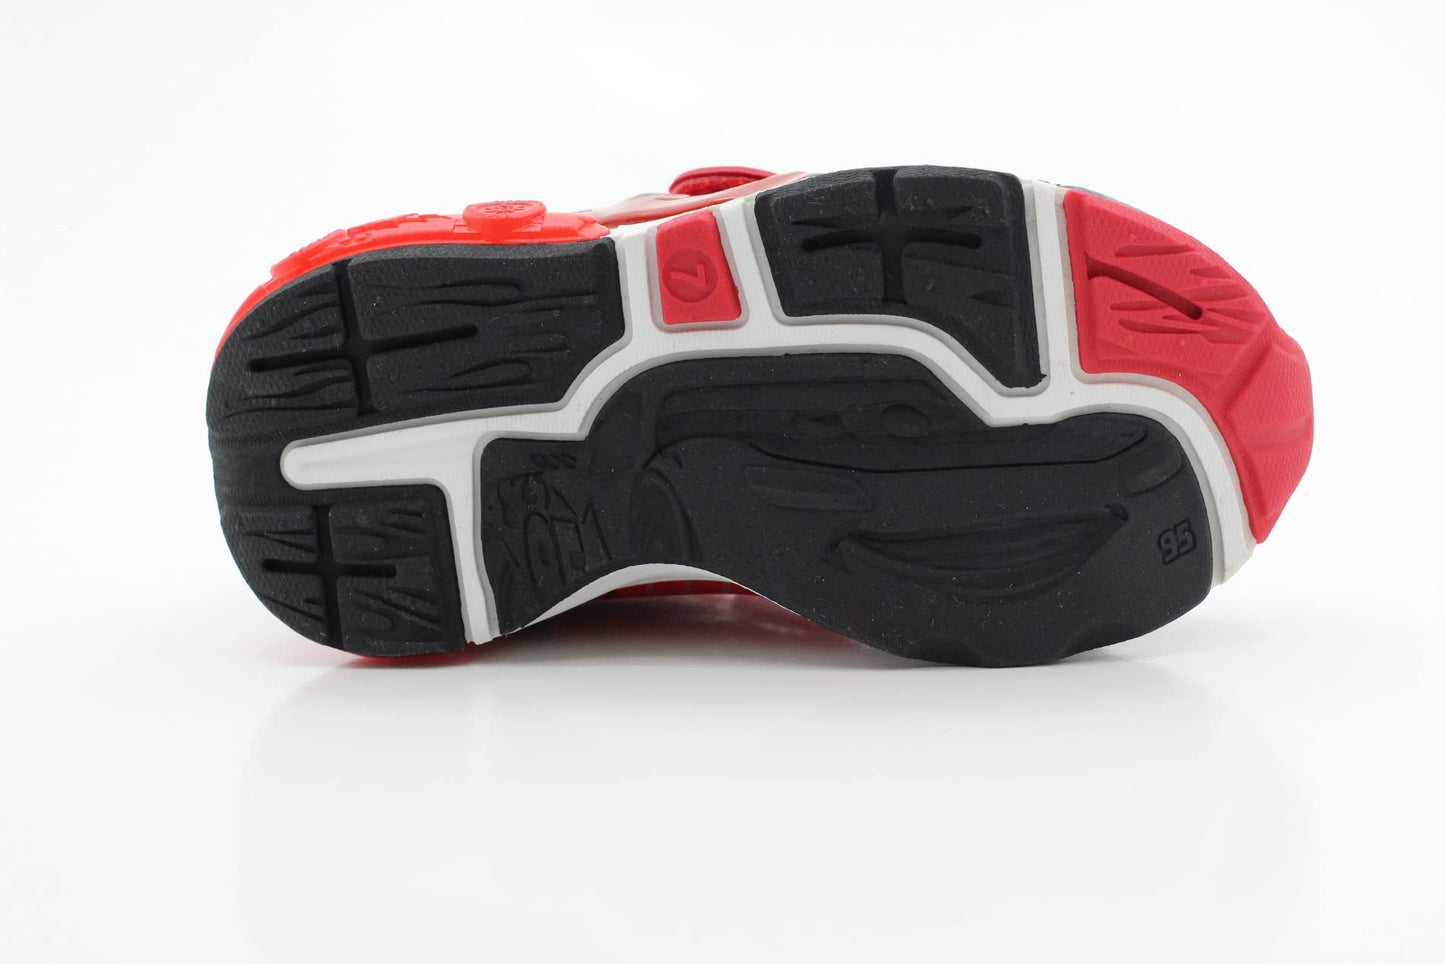 Disney Pixar Cars Boy's Lighted Athletic Sneaker, Black/Red (Toddler/Little Kid)